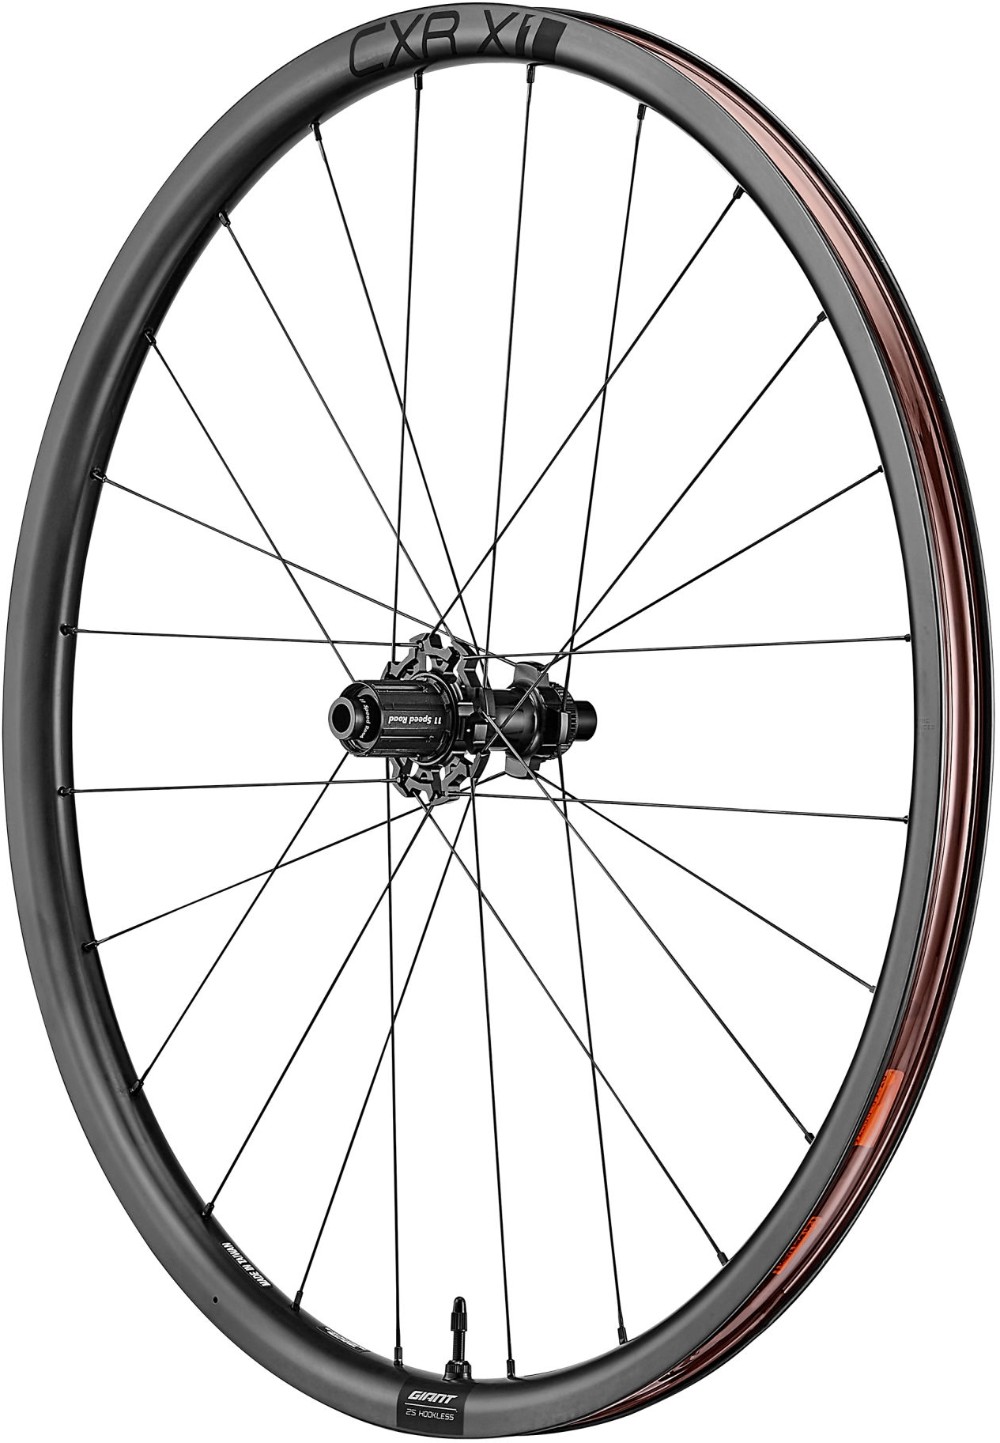 CXR1 X1 Rear Wheel image 1